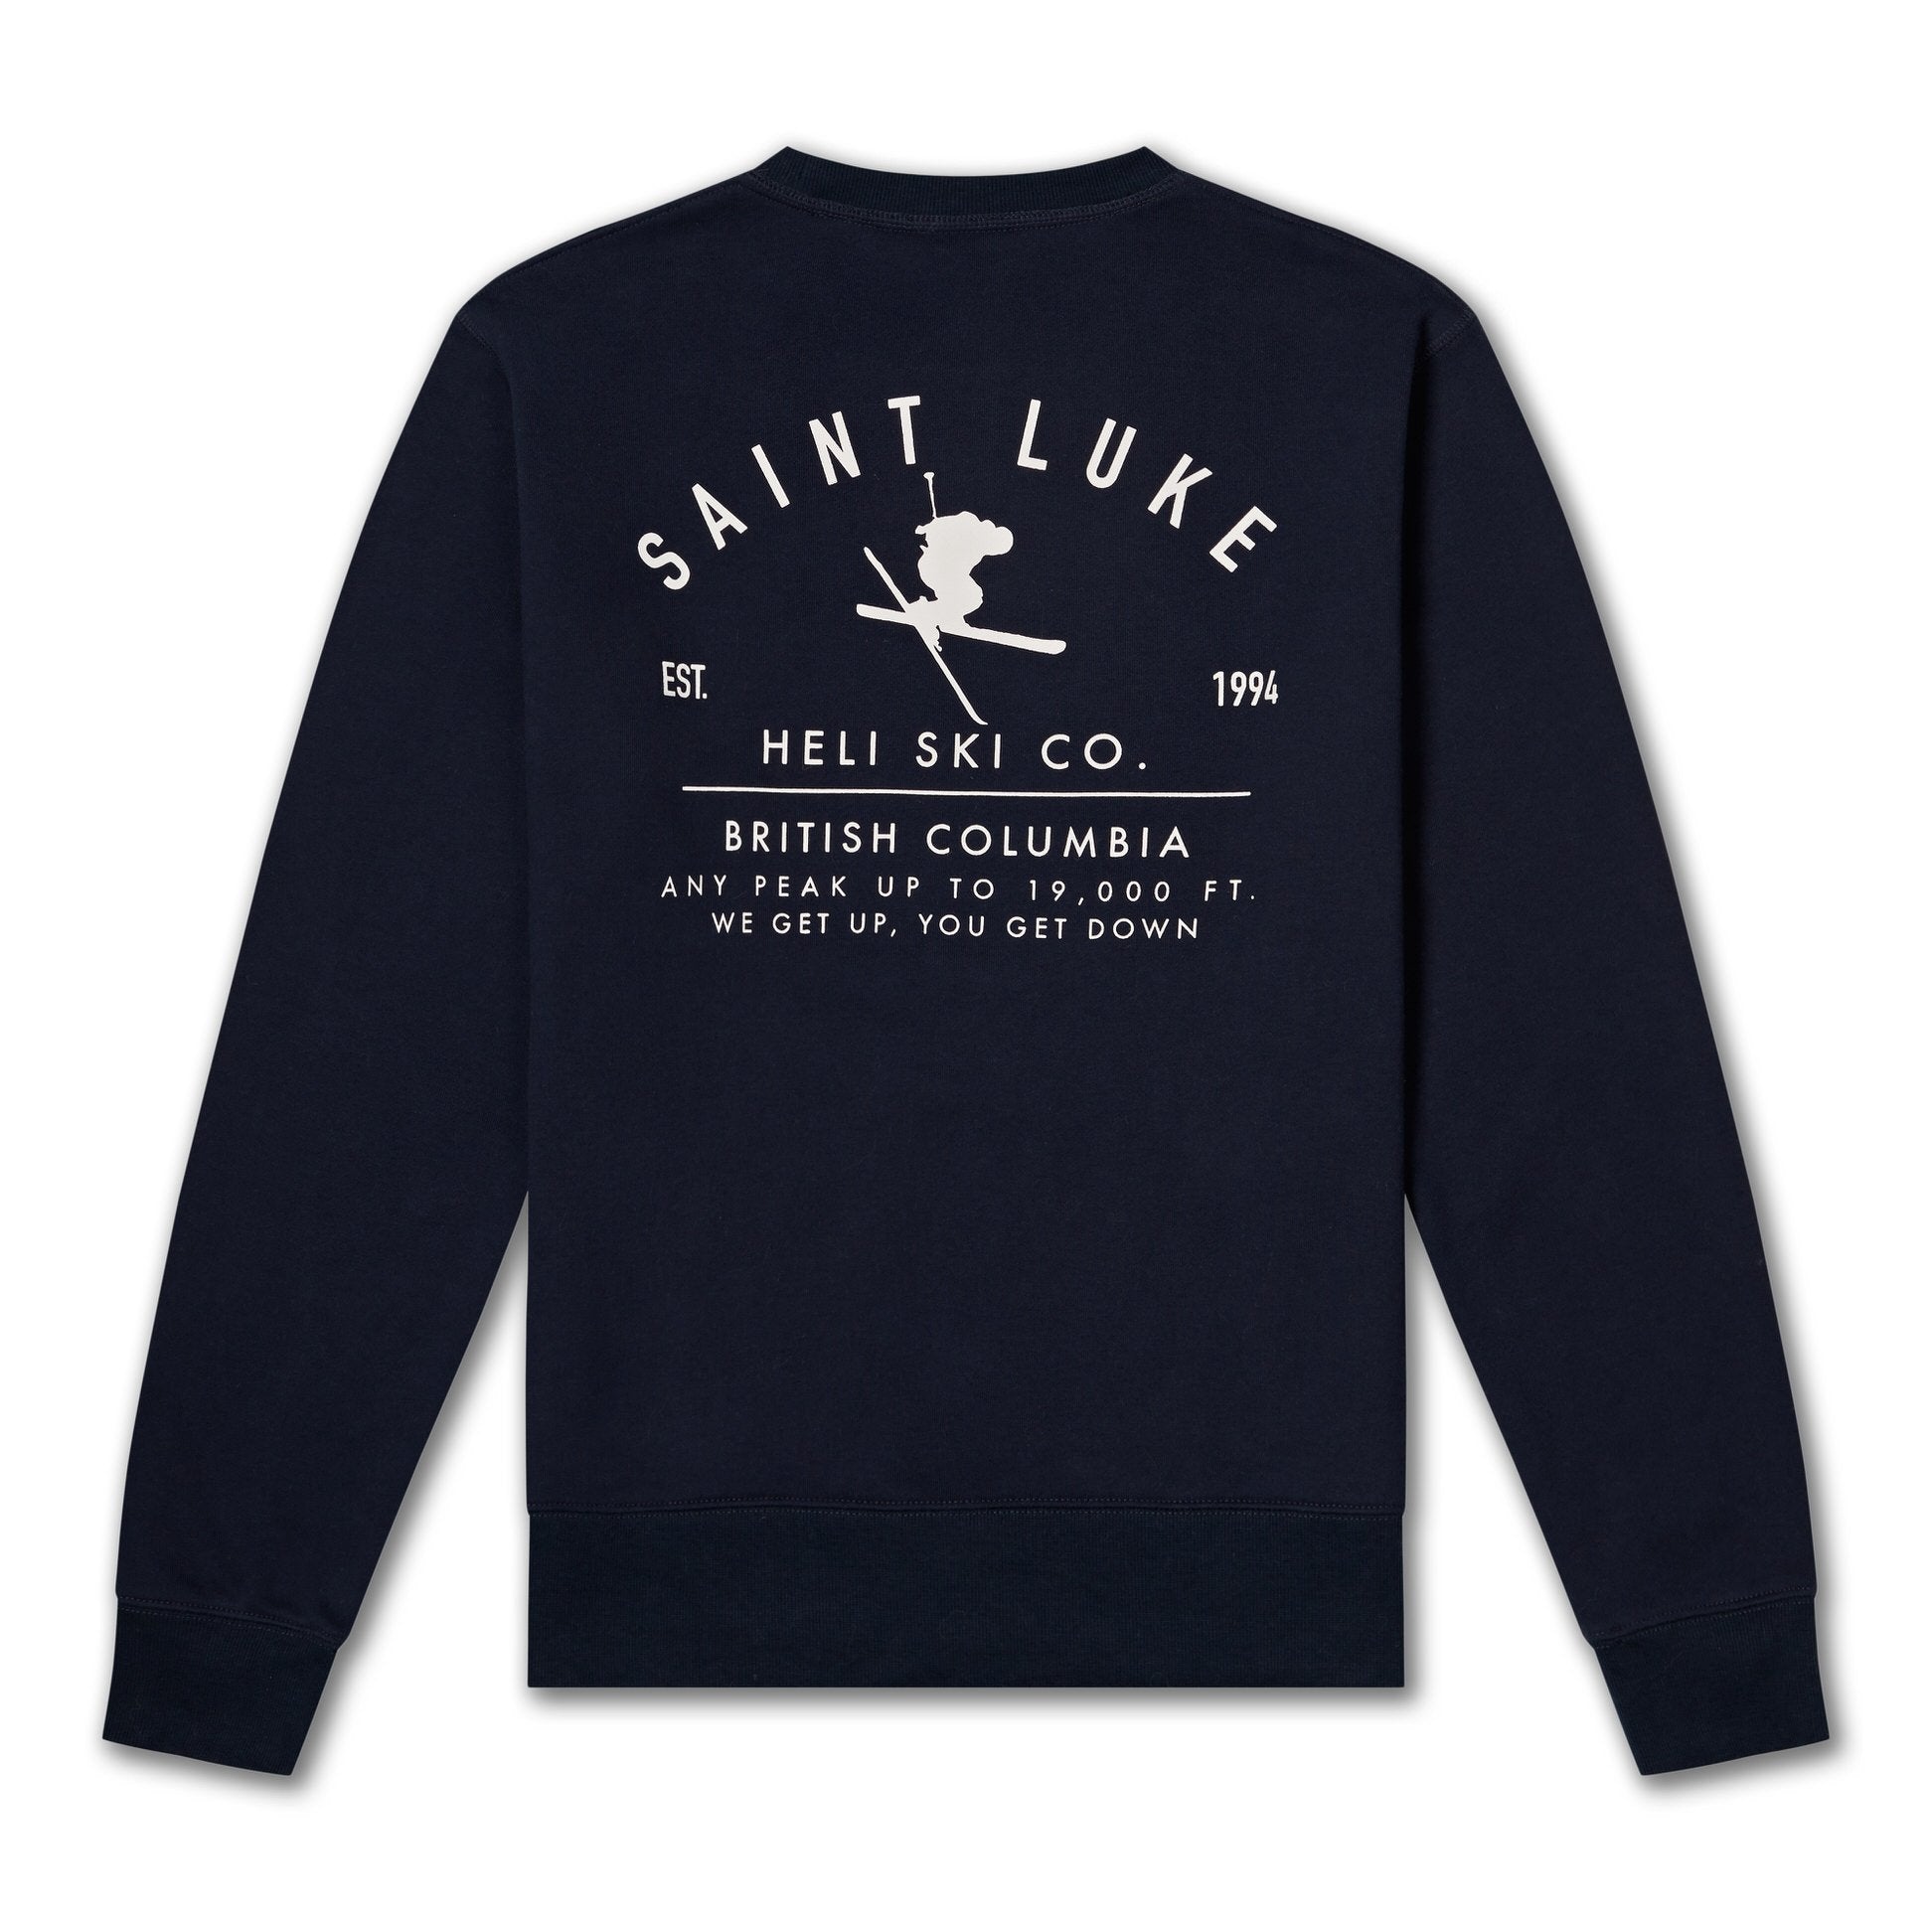 Saint Luke Heli Ski Co. Sweater